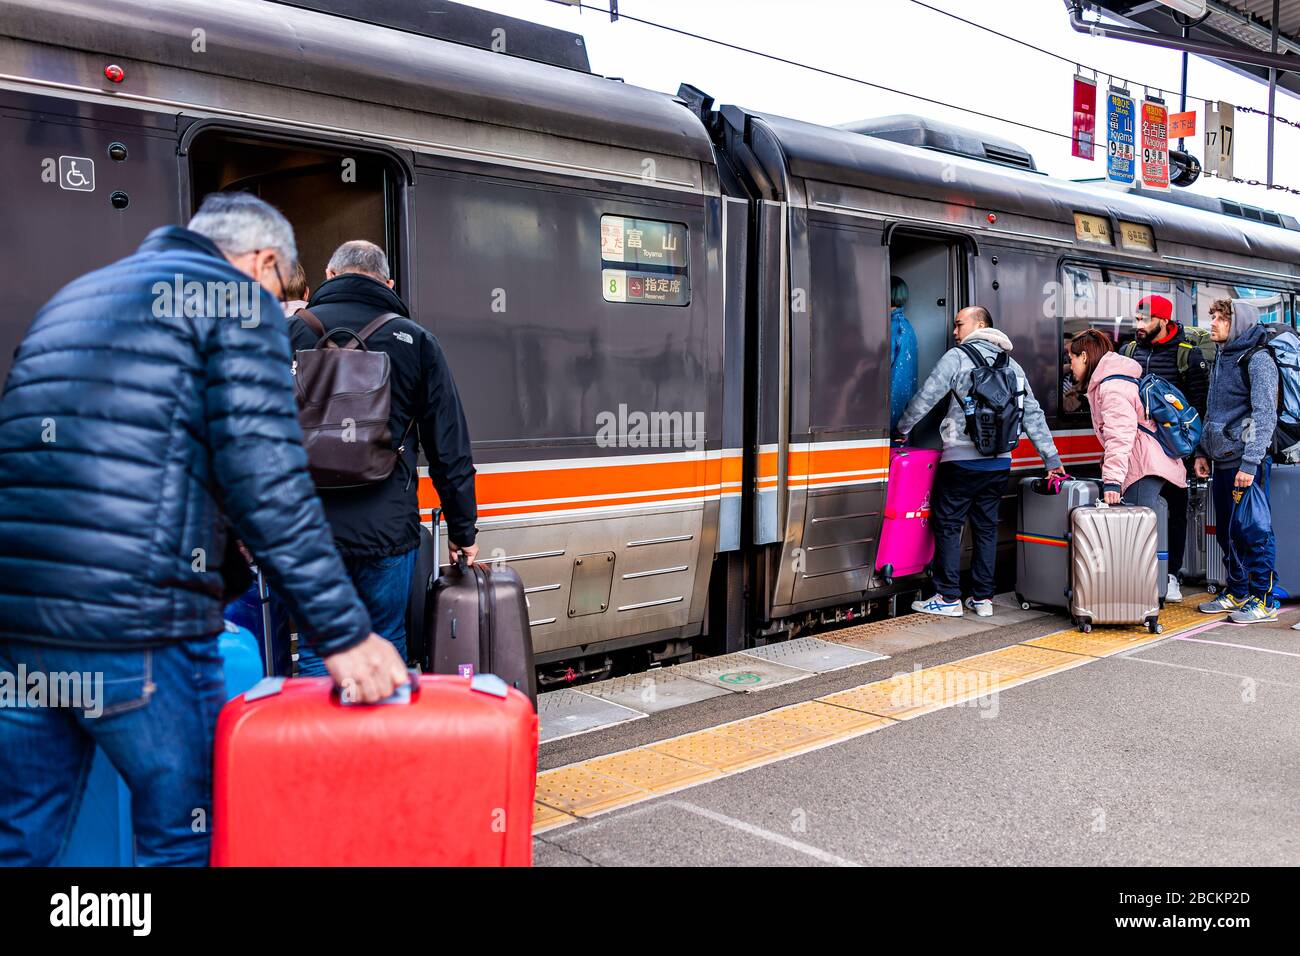 Takayama, Japan - April 8, 2019: JR train station platform with people boarding locomotive waiting in line queue in Gifu prefecture with Hida shinkans Stock Photo